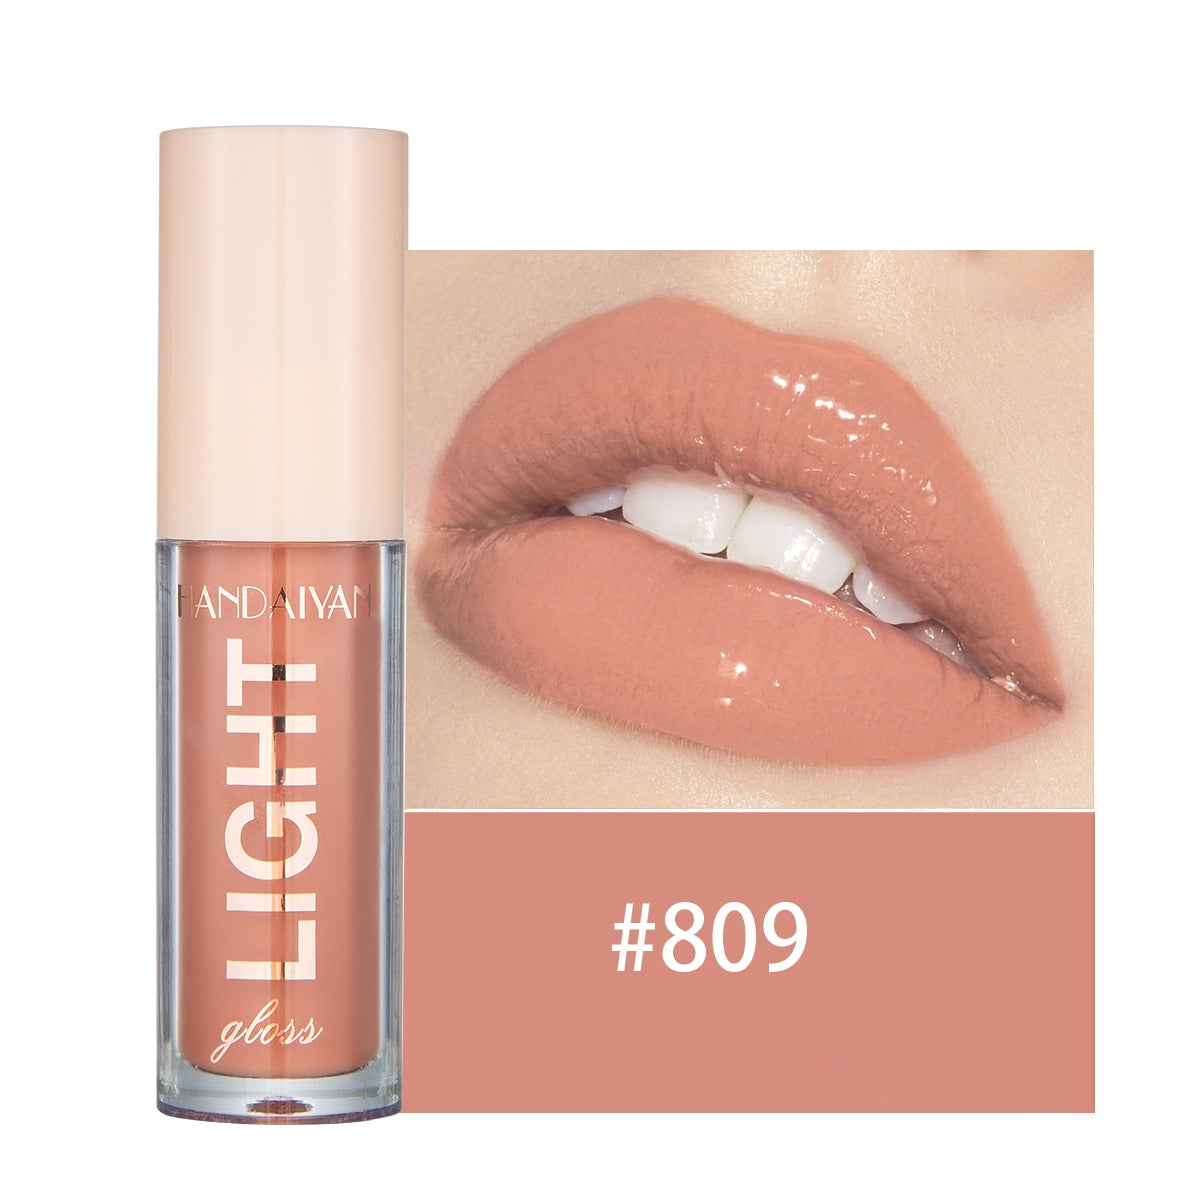 12 Colors Mirror Pearl Lip Gloss Waterproof Long Lasting Moisturizing Lipstick Shine Glitter Lip Gloss Women Makeup Cosmetic